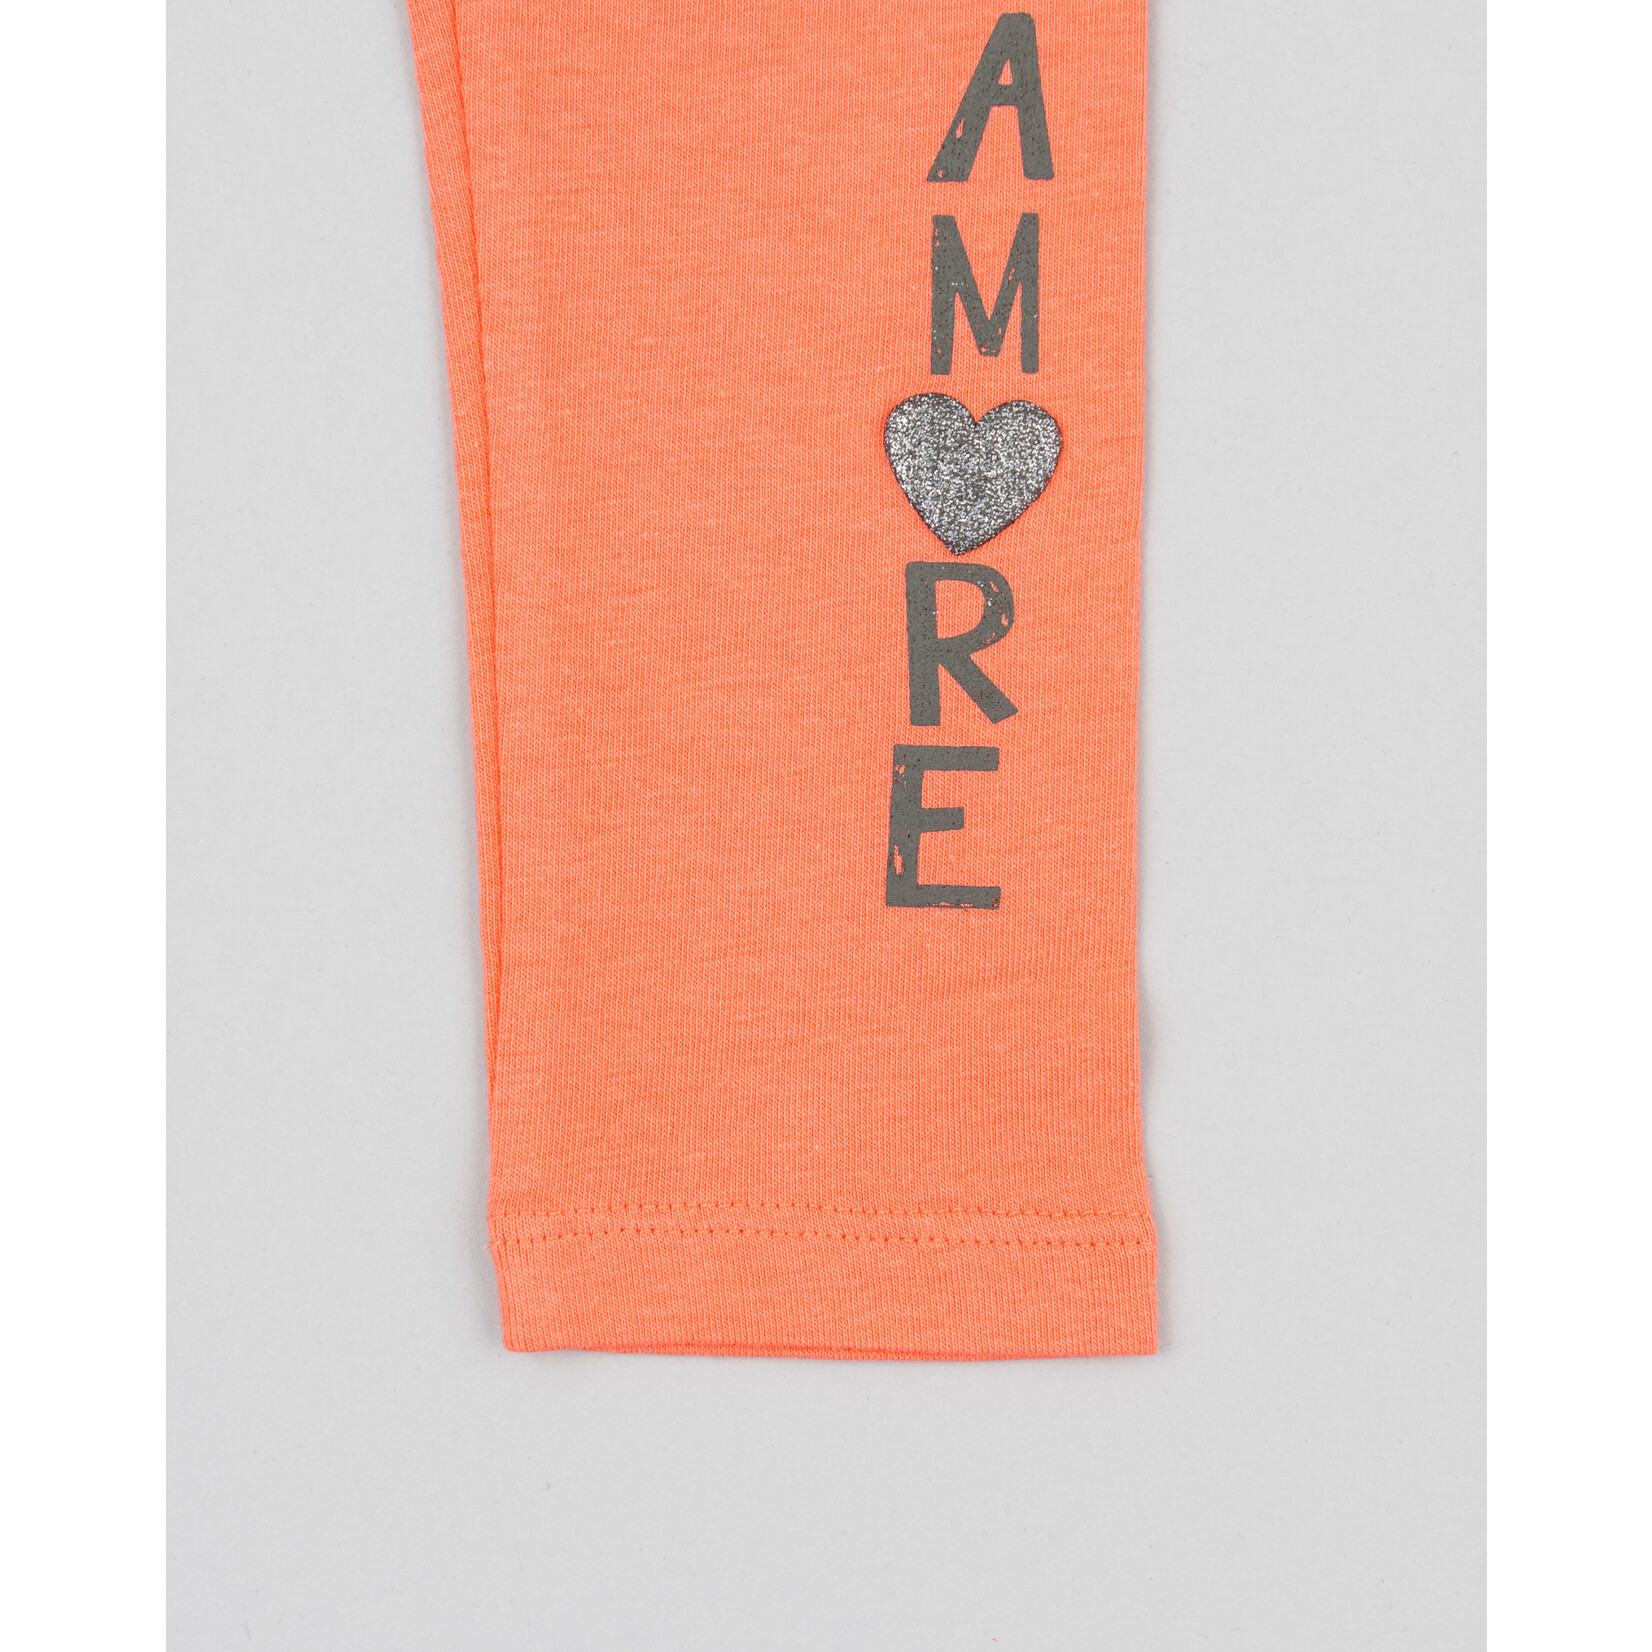 Losan LOSAN - Plain Neon Orange Leggings with 'Amore' Ankle Print